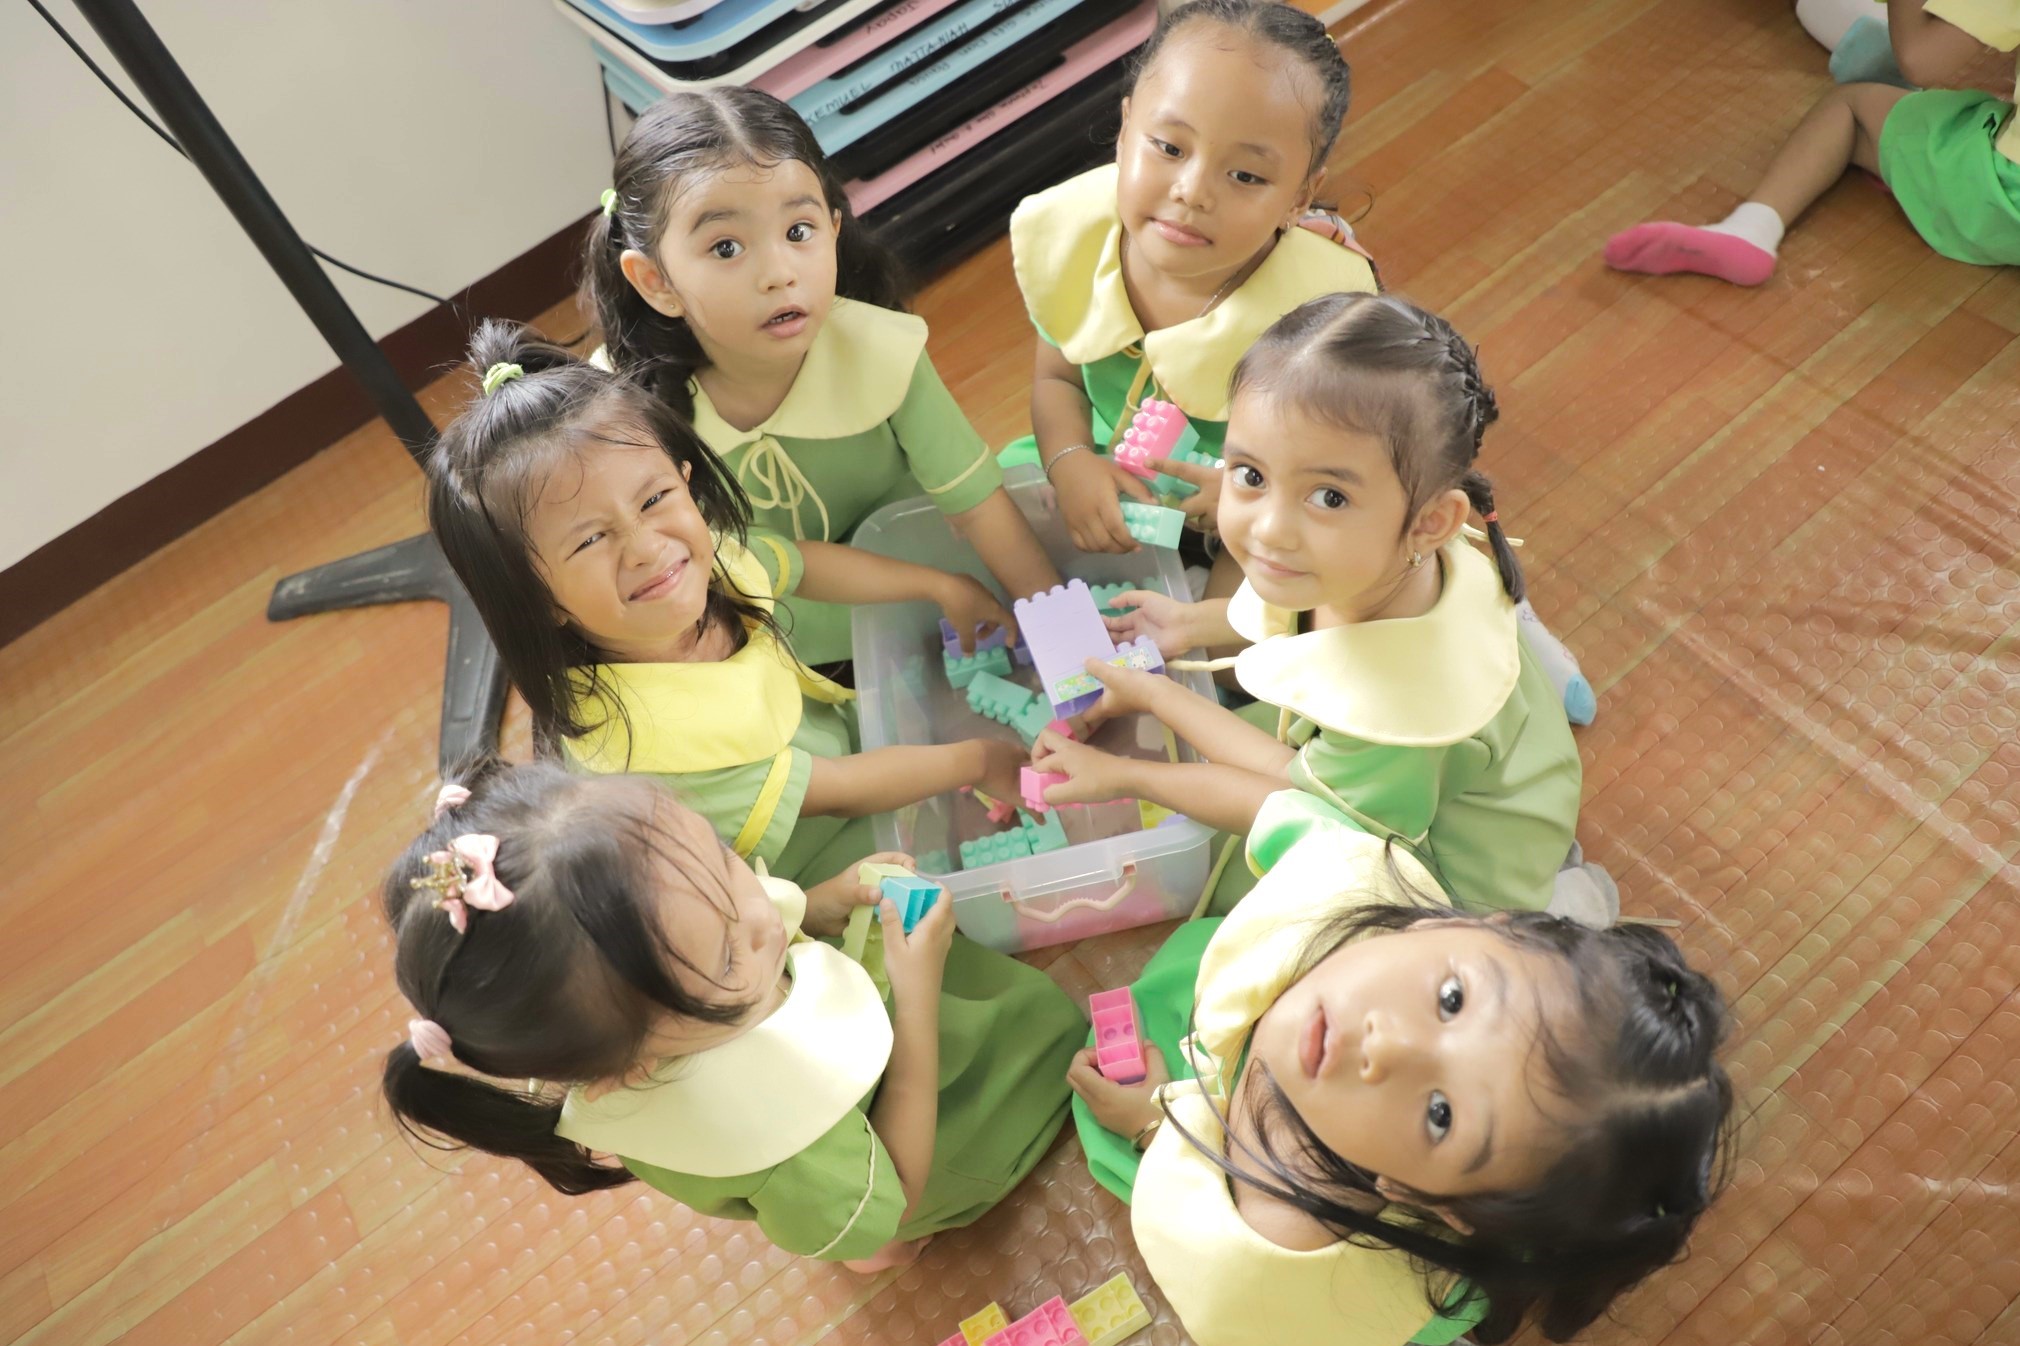 Child Development Center Renovations Foster Brighter Future For Children